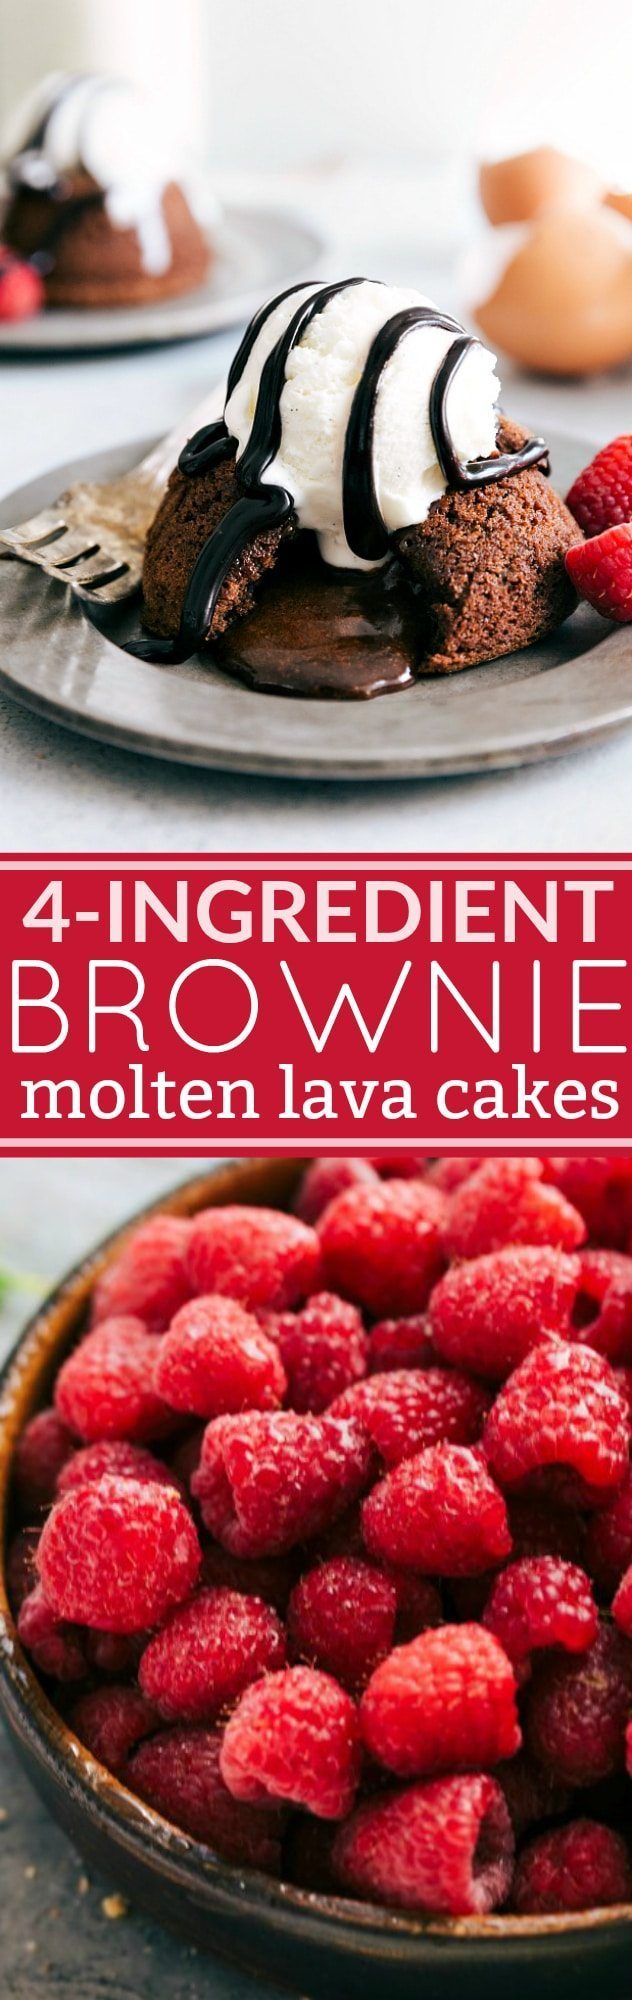 Brownie Molten Lava Cakes